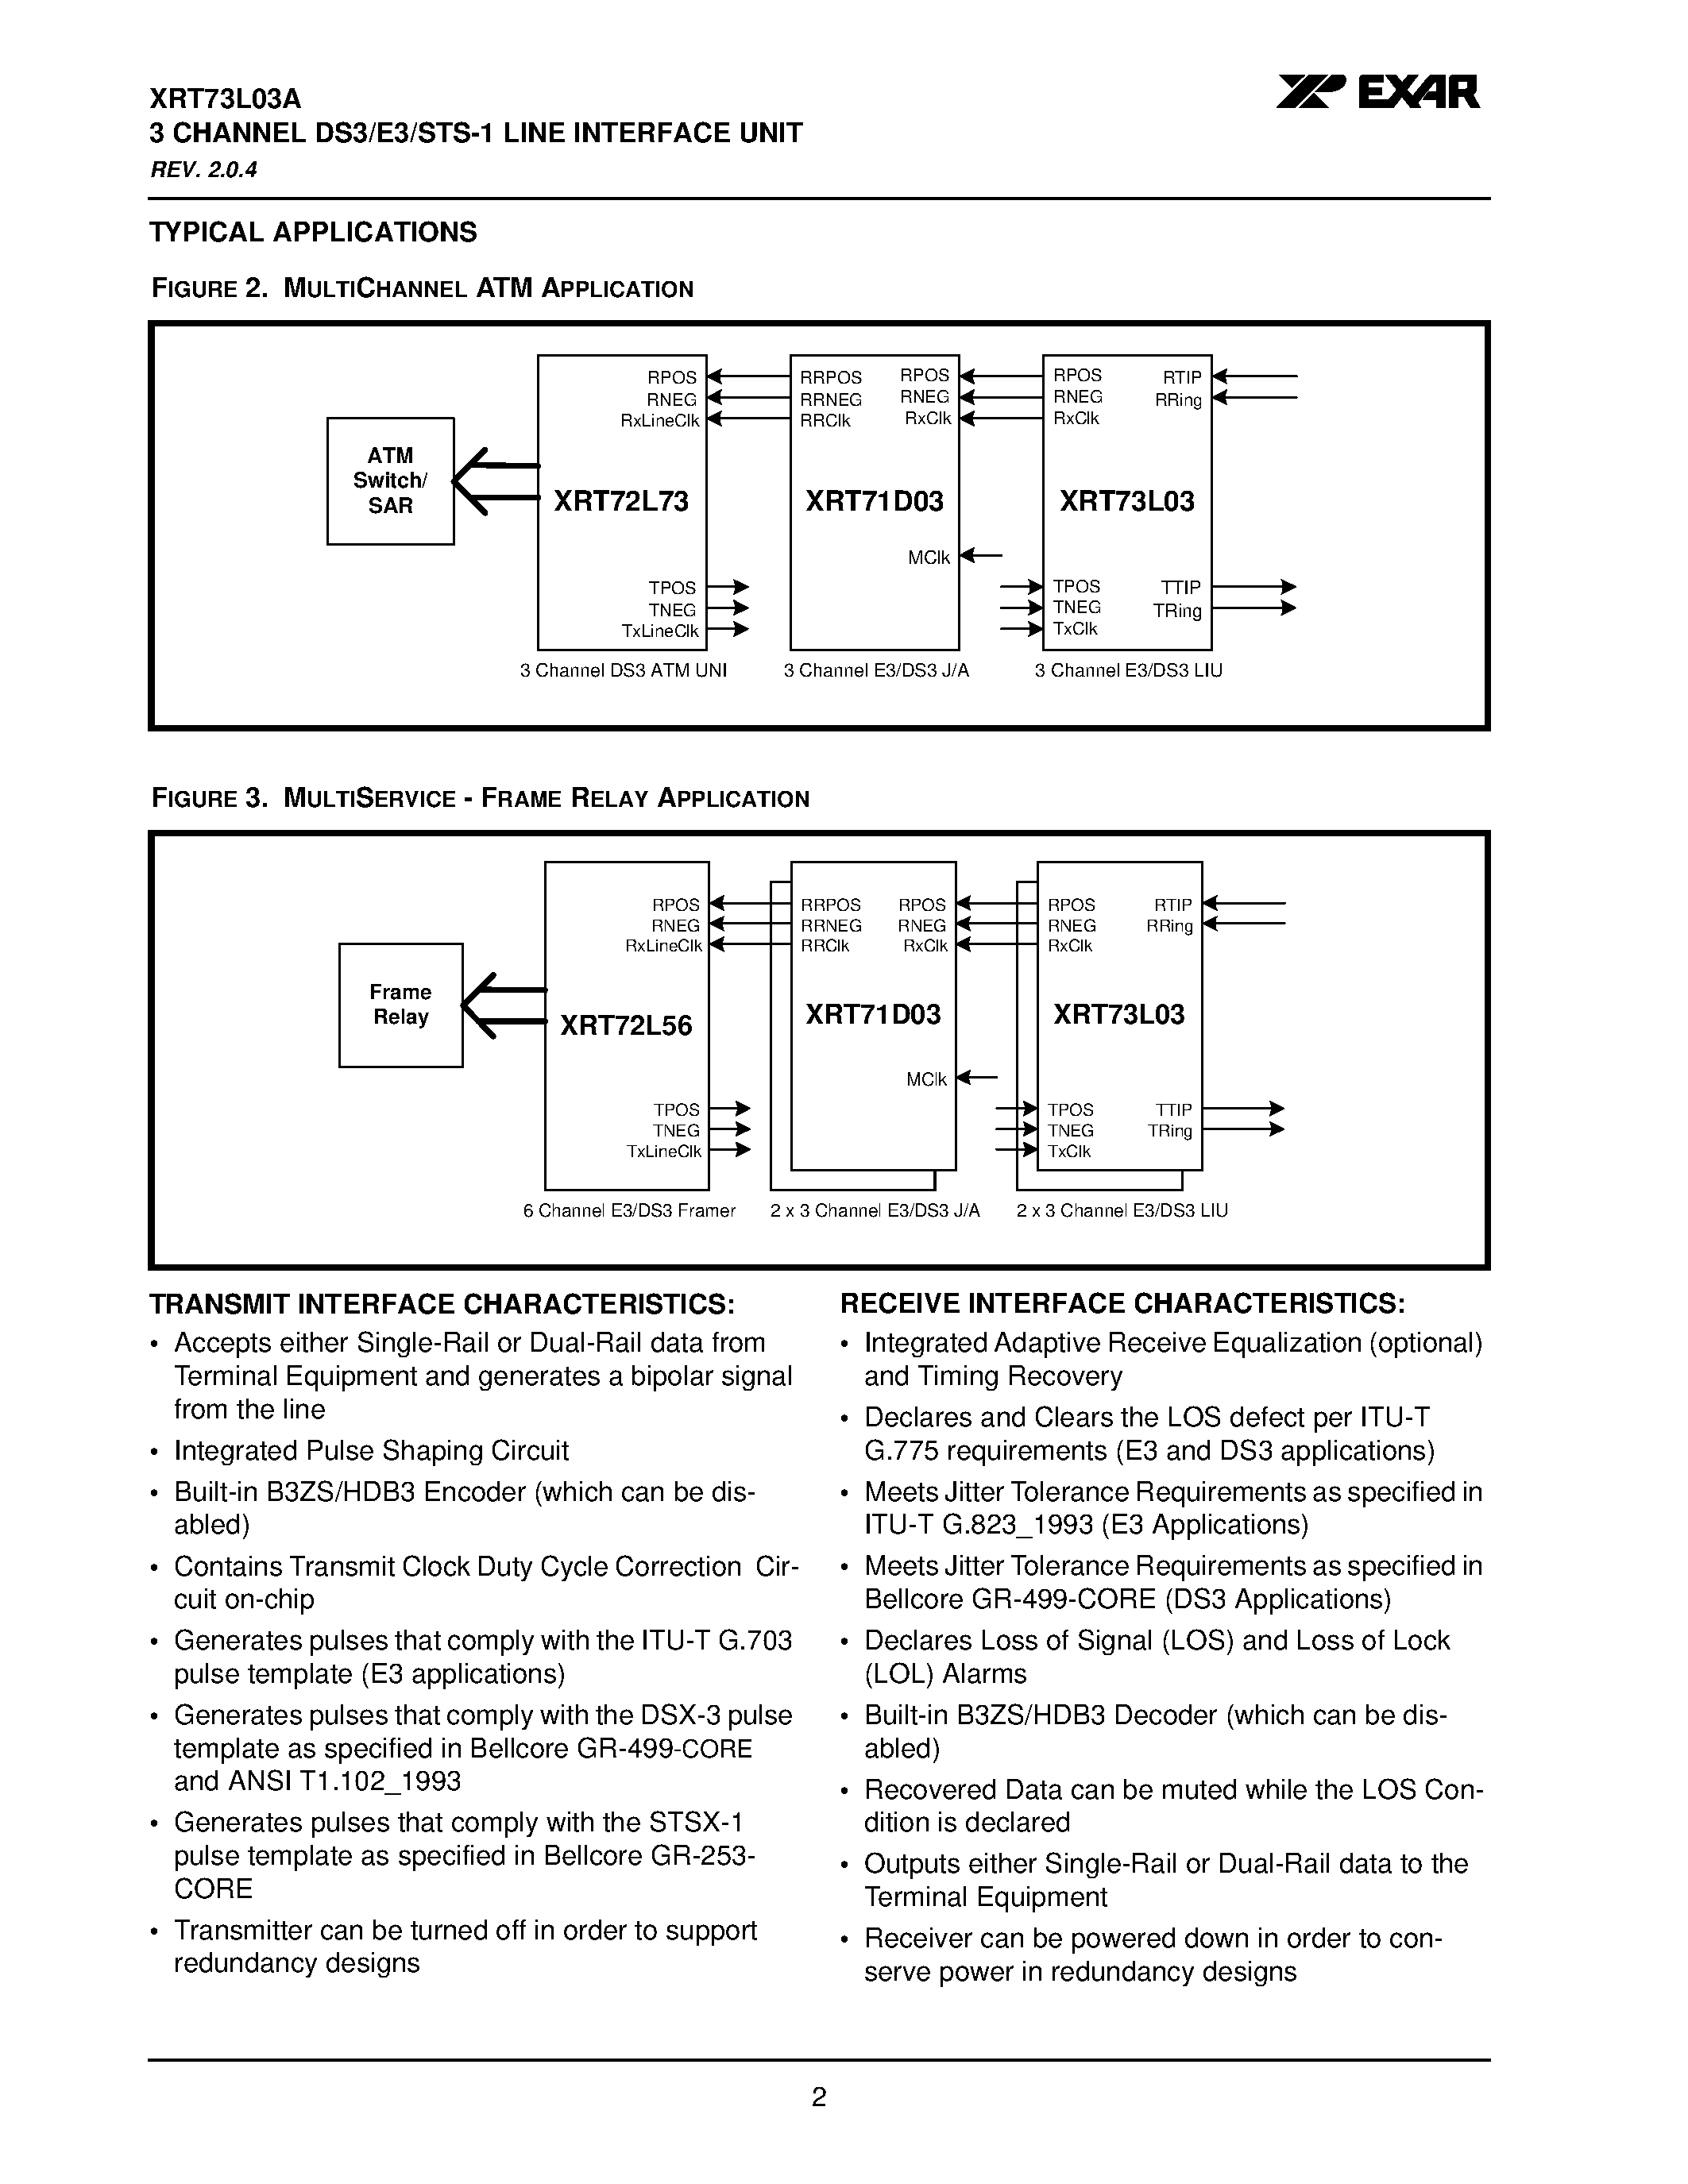 Datasheet XRT73L03A - 3 CHANNEL DS3/E3/STS-1 LINE INTERFACE UNIT page 2